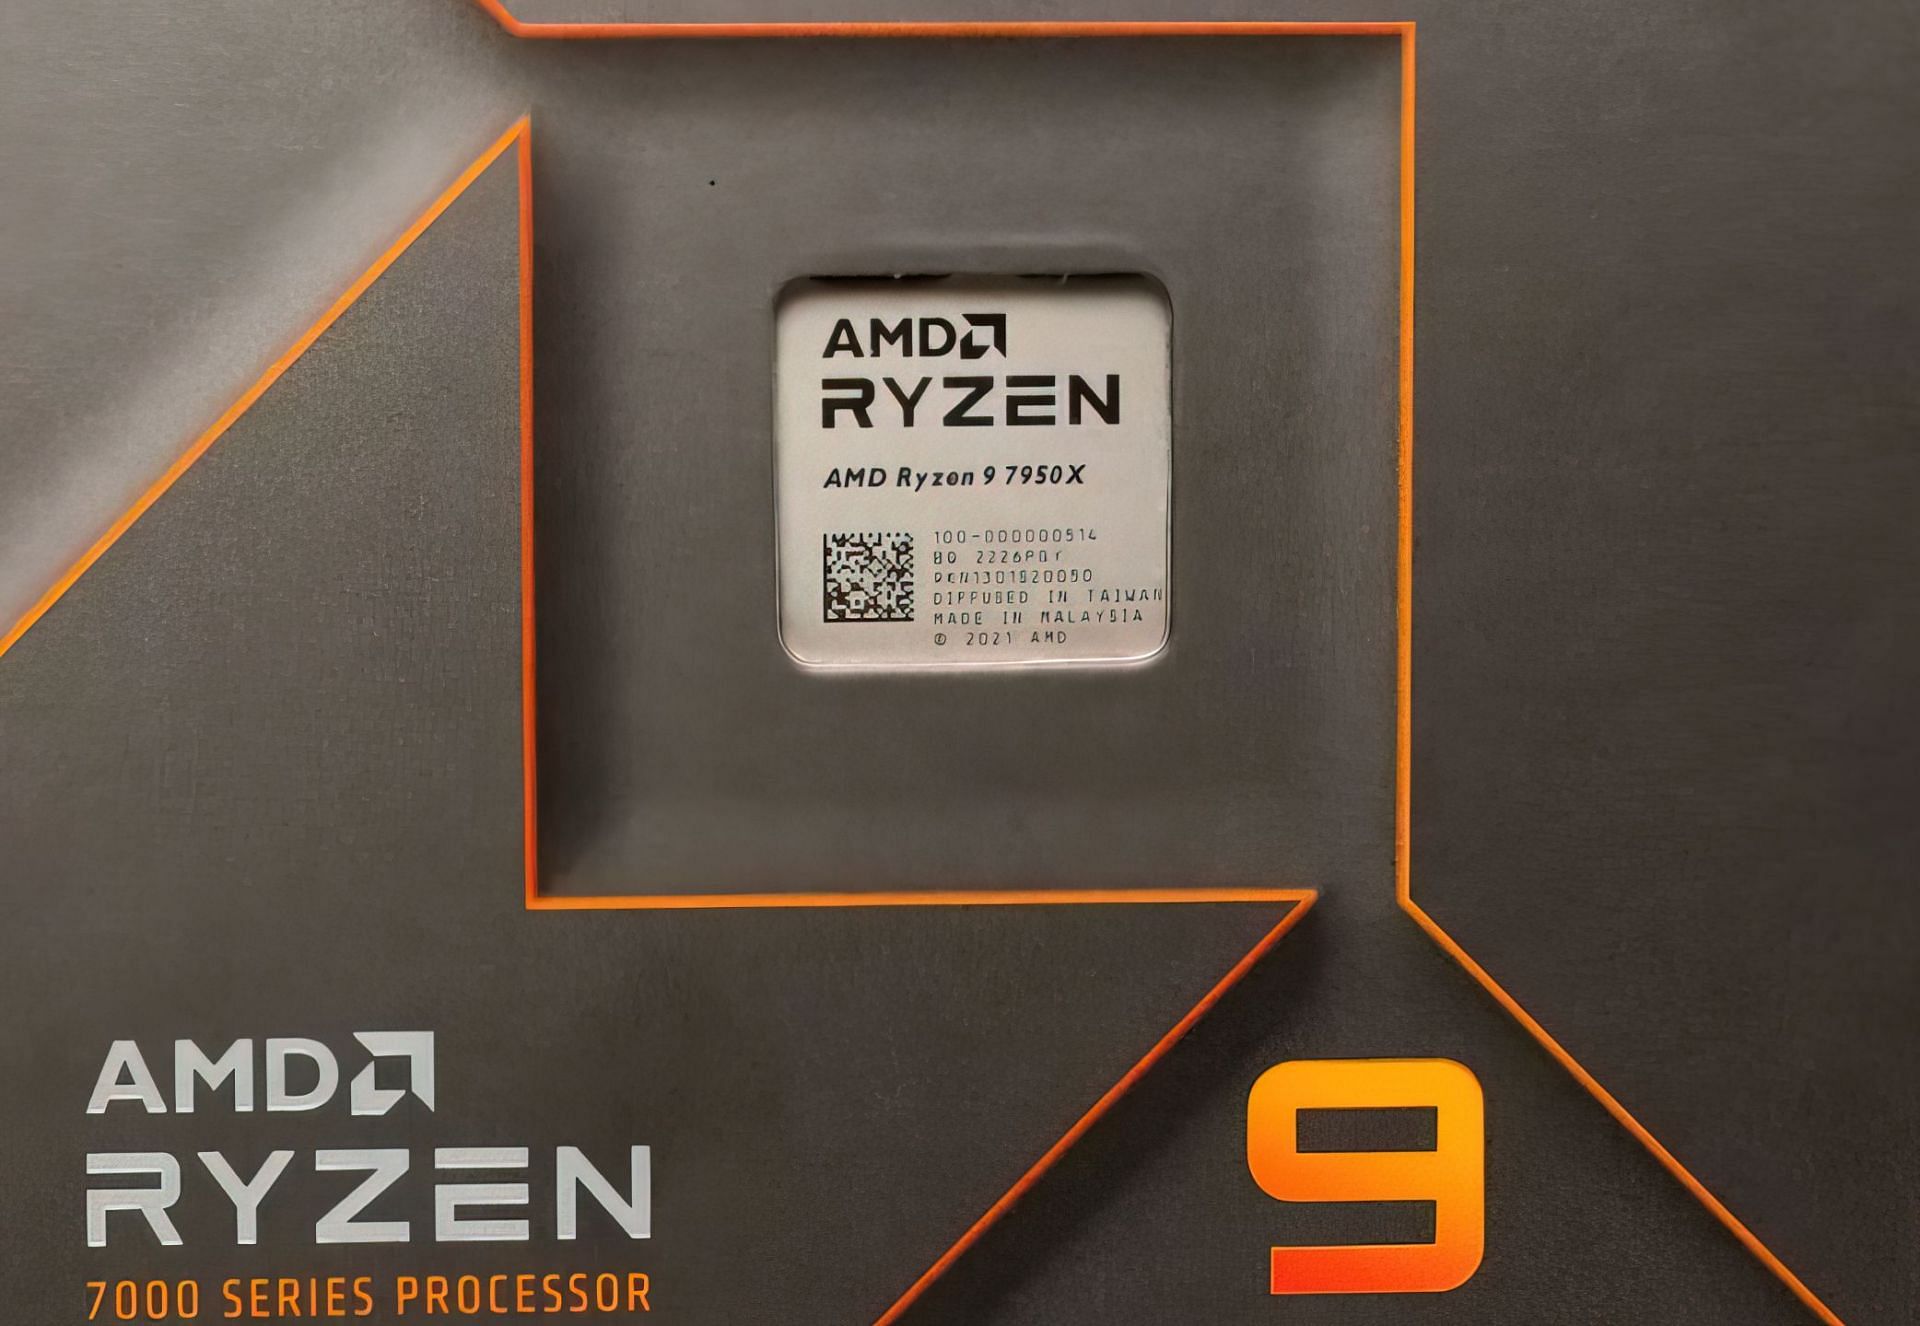 The branding on the Ryzen 9 processor (Image via AMD)